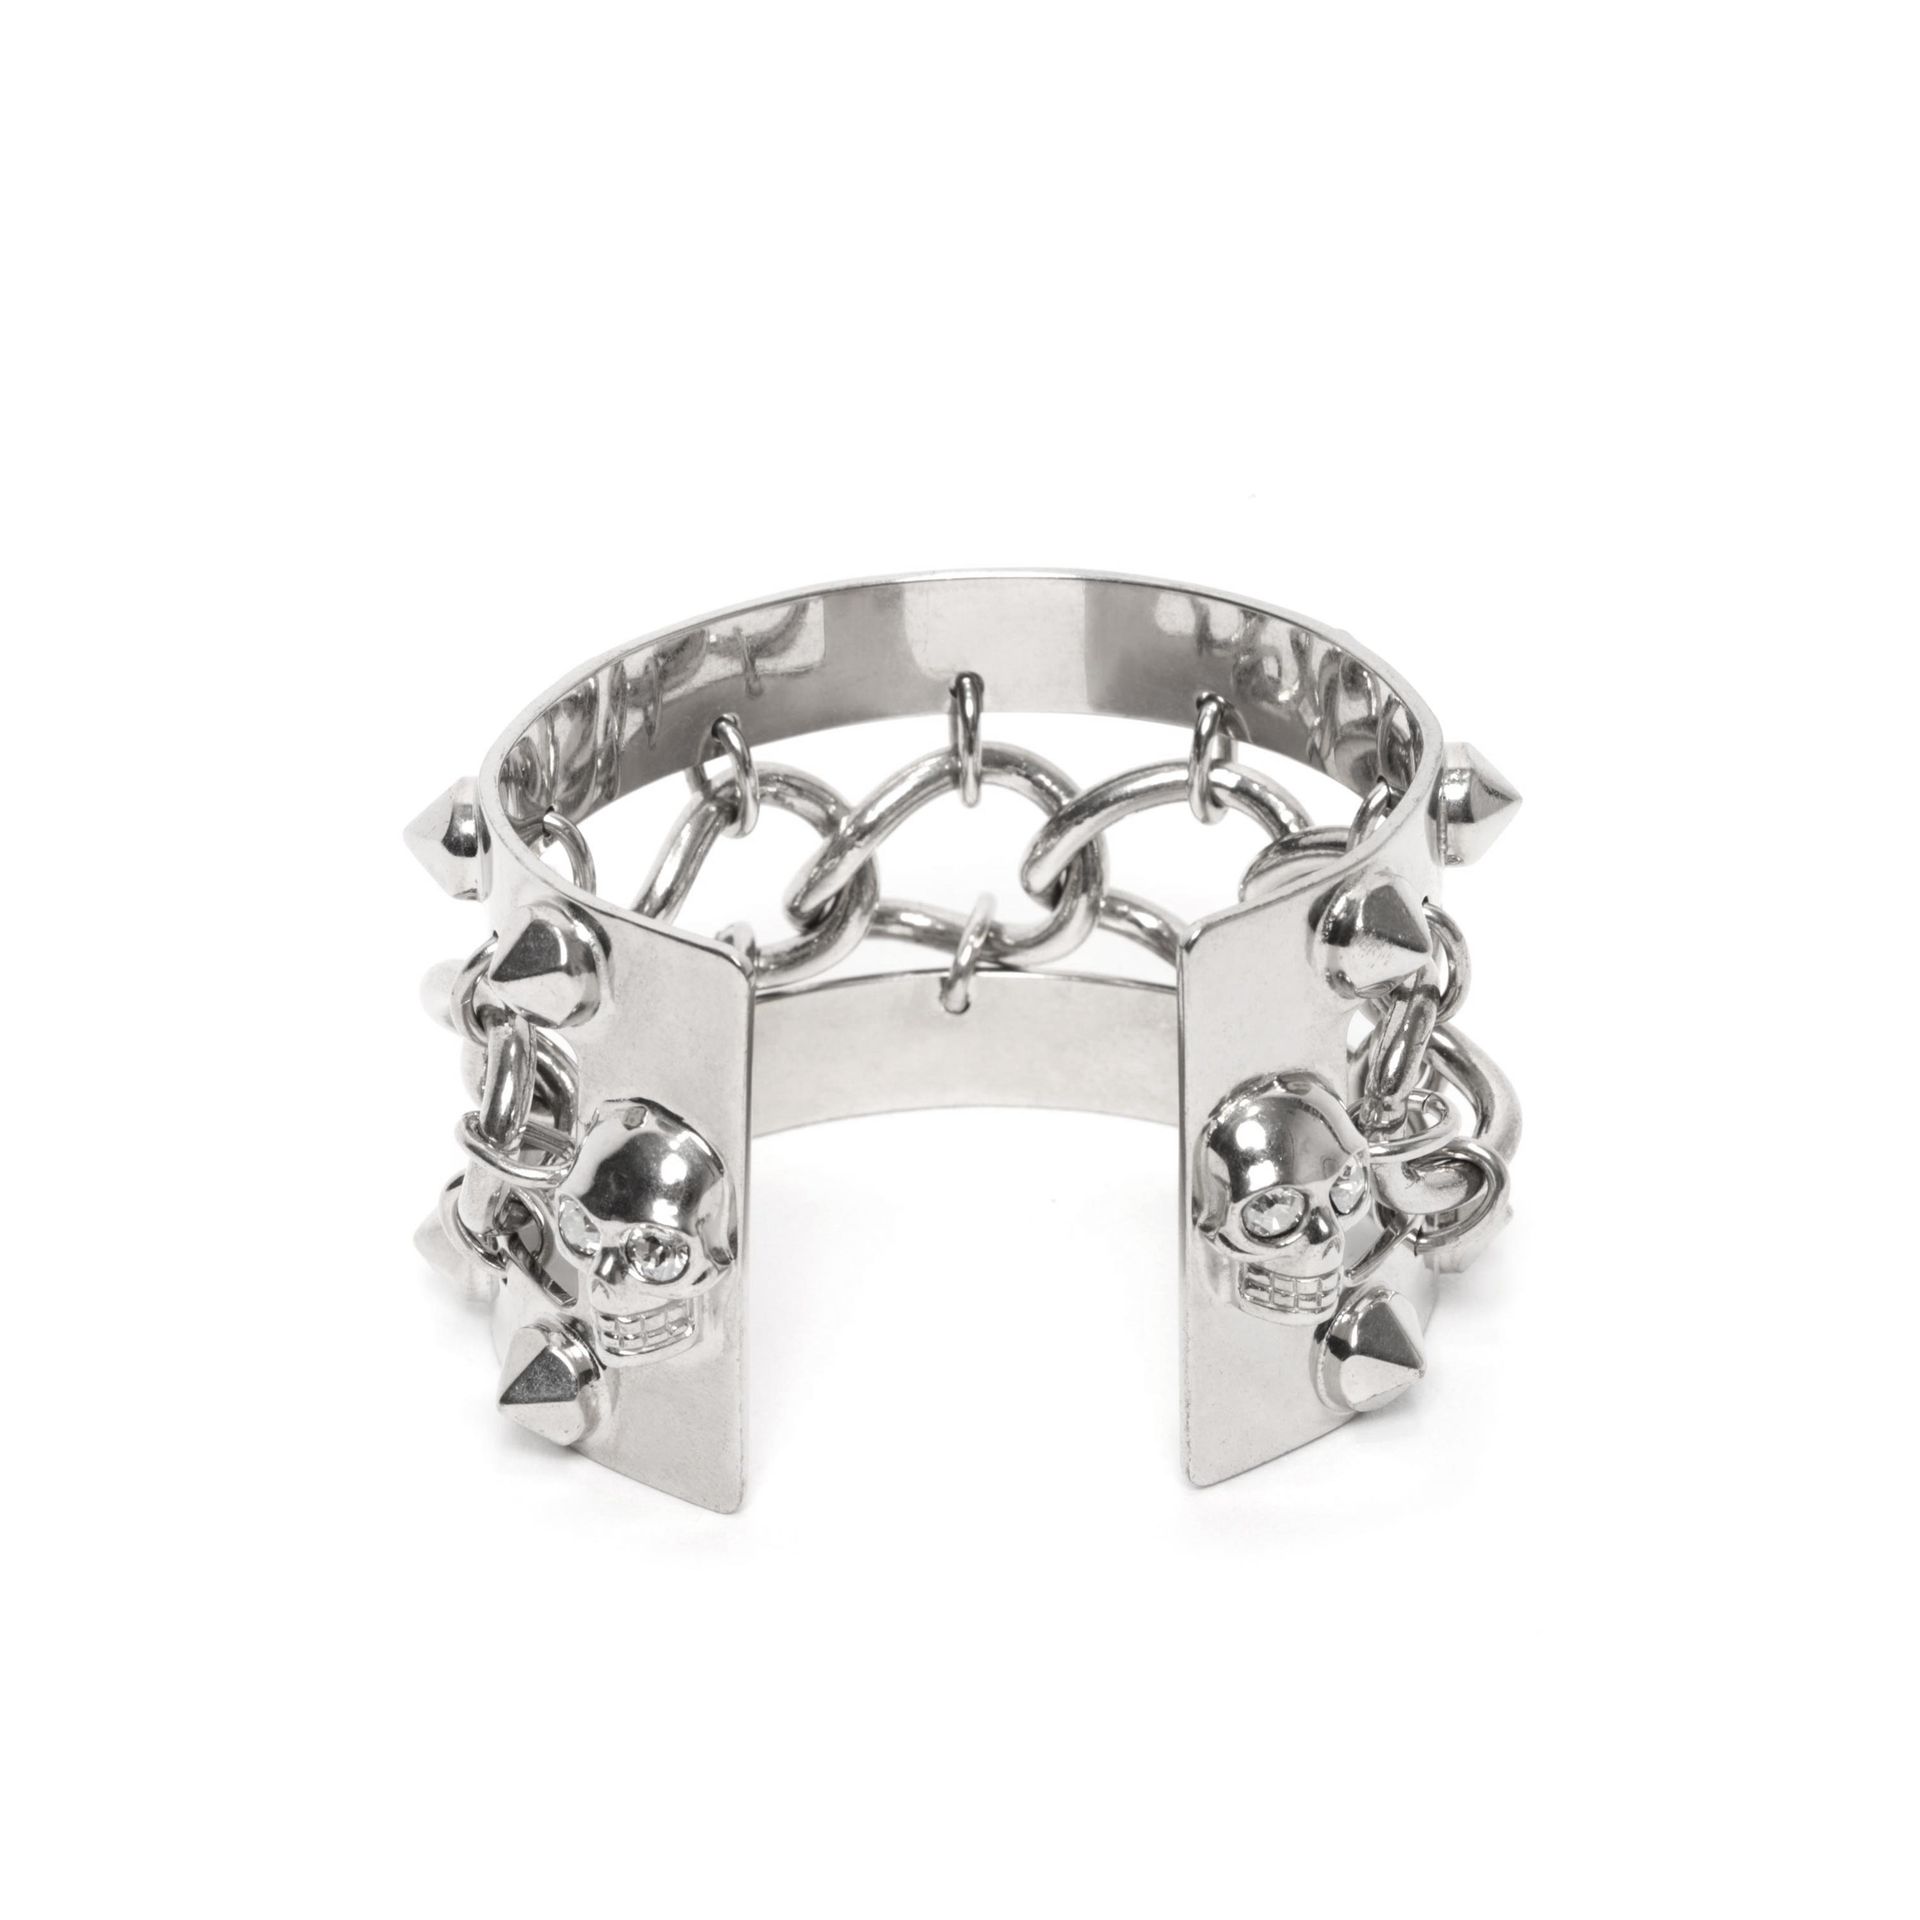 Chain Studs Cuff Alexander McQueen | Bracelet | Jewelry